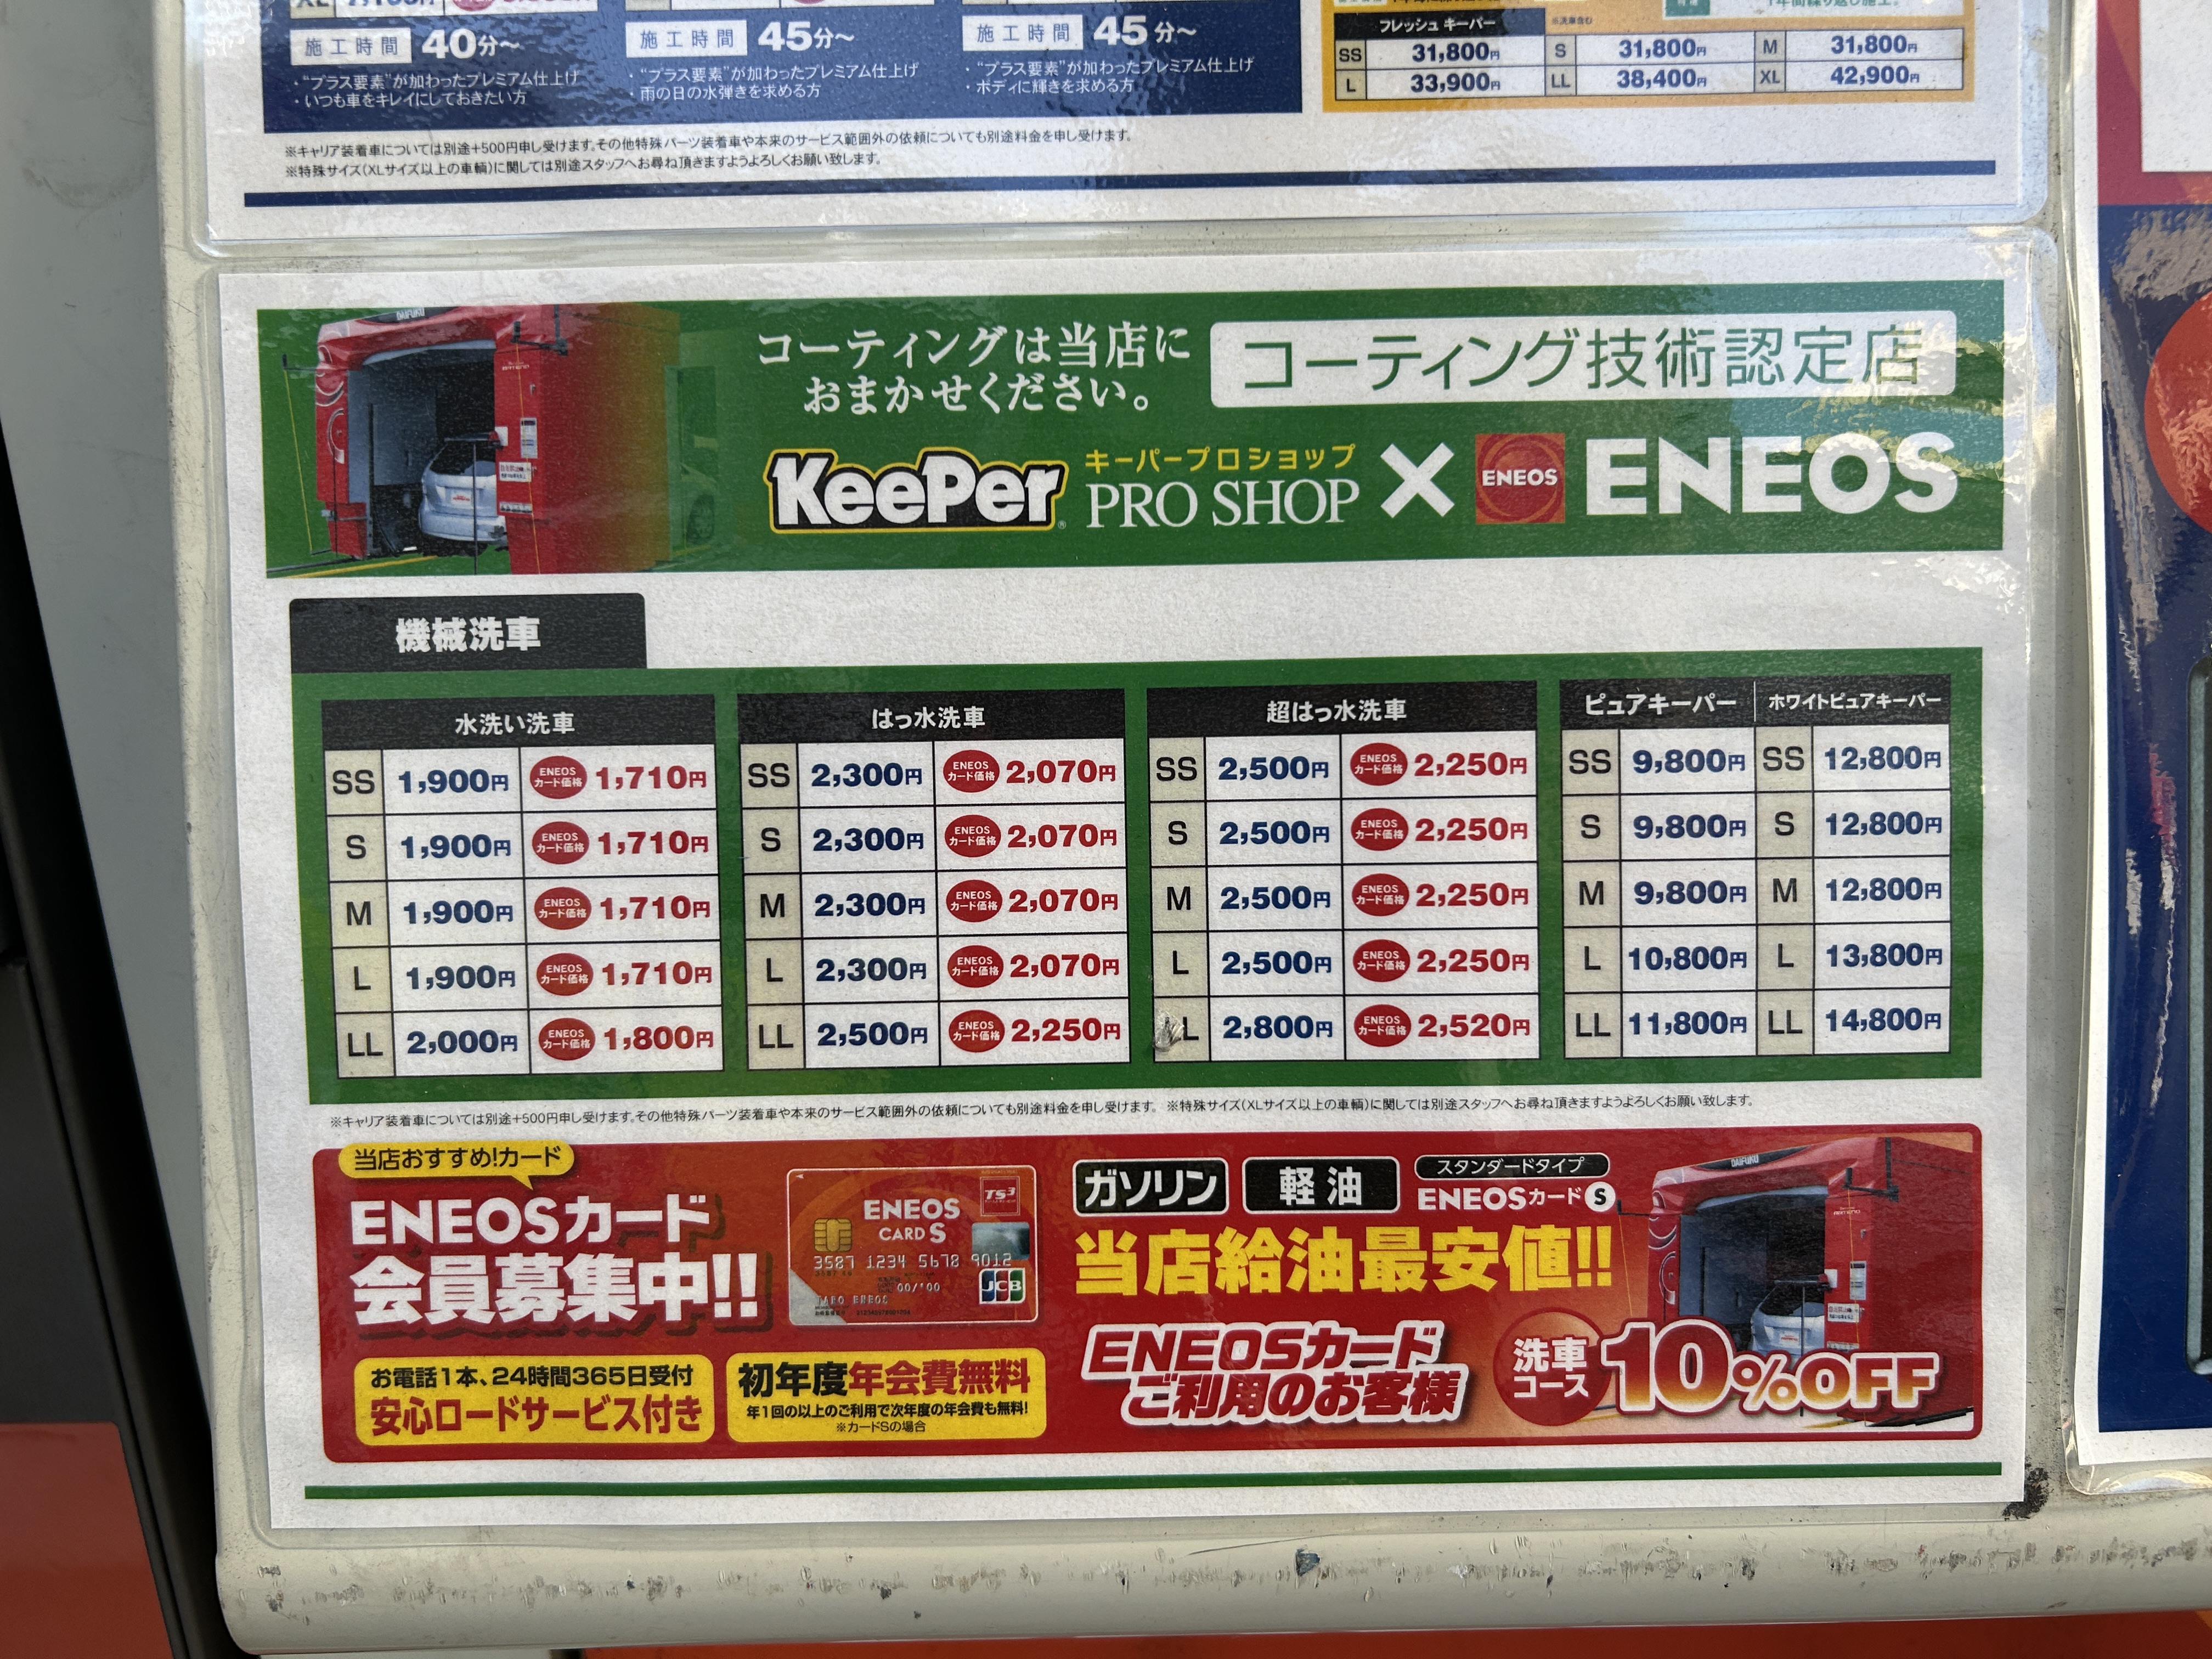 ENEOS Dr.Driveセルフ柿の木坂店 / ENEOSフロンティア